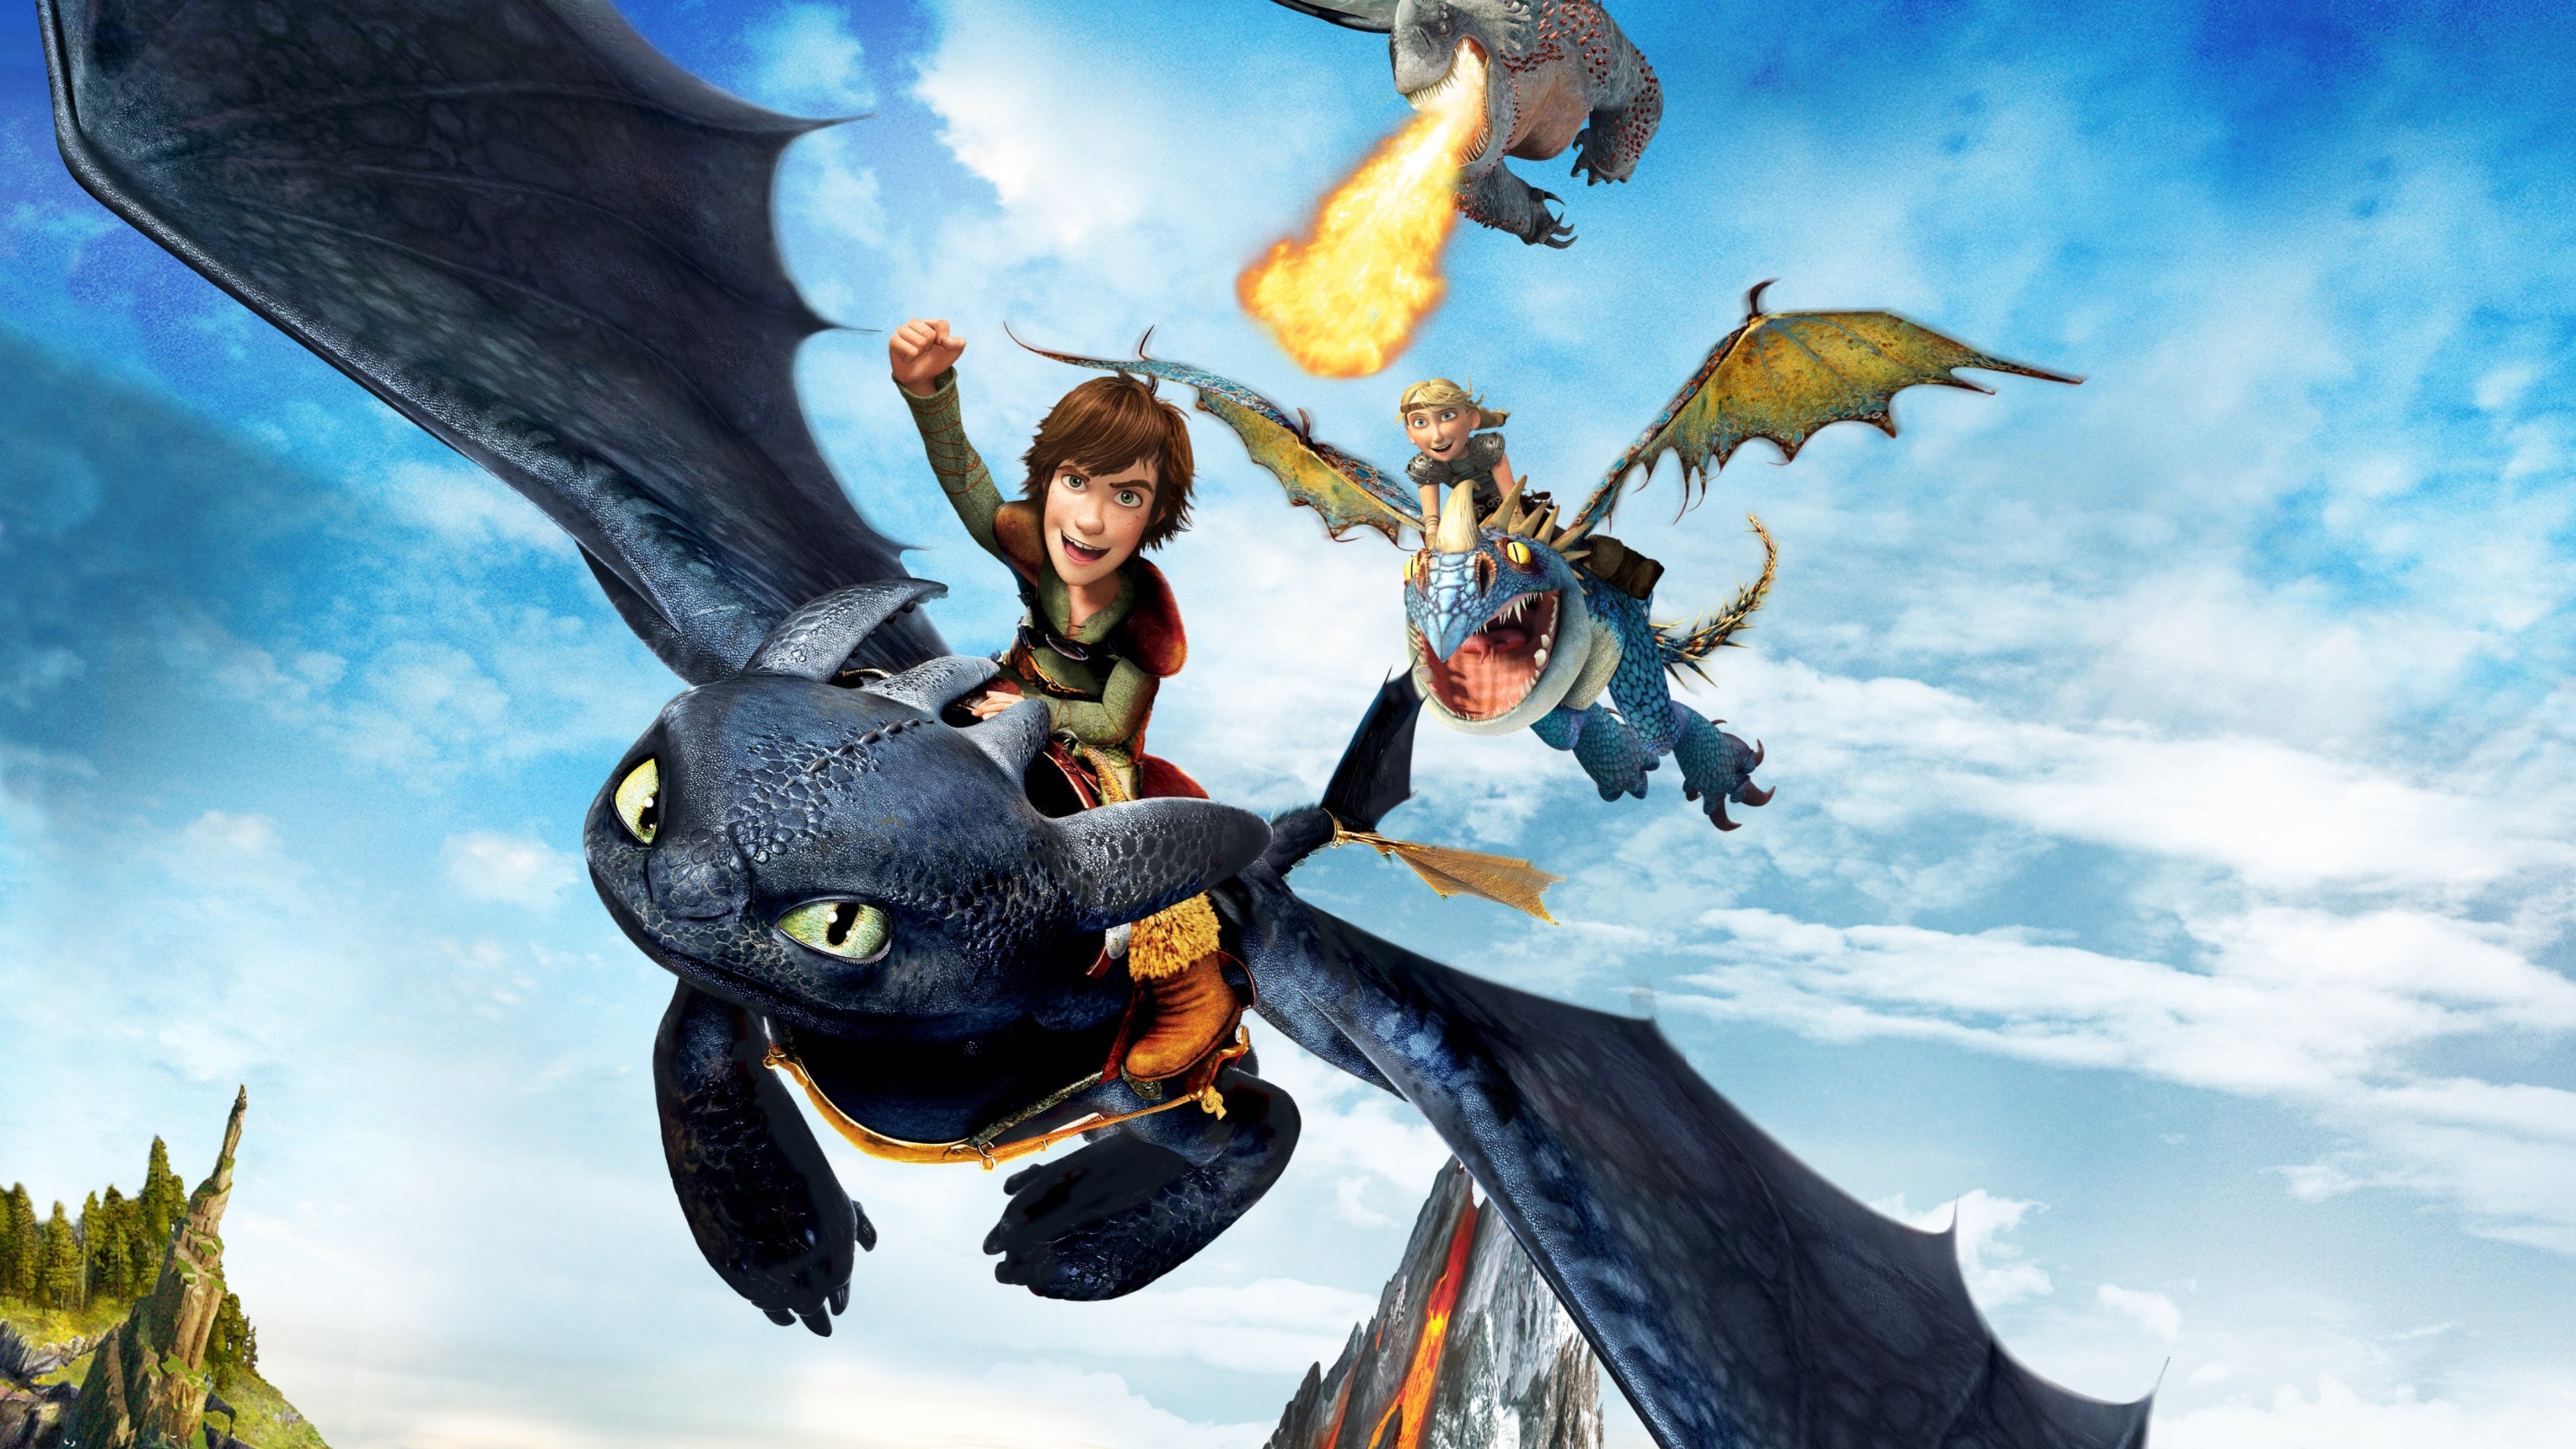 Poster Phim Bí Kíp Luyện Rồng (How To Train Your Dragon)